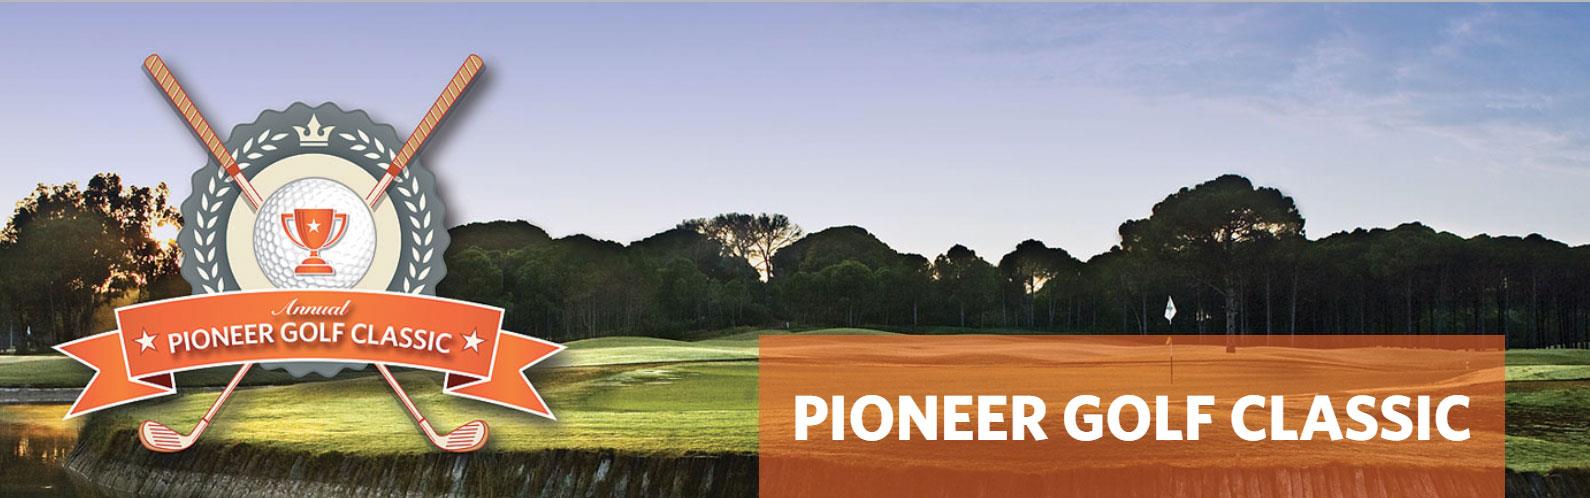 49th Annual Pioneer Golf Classic